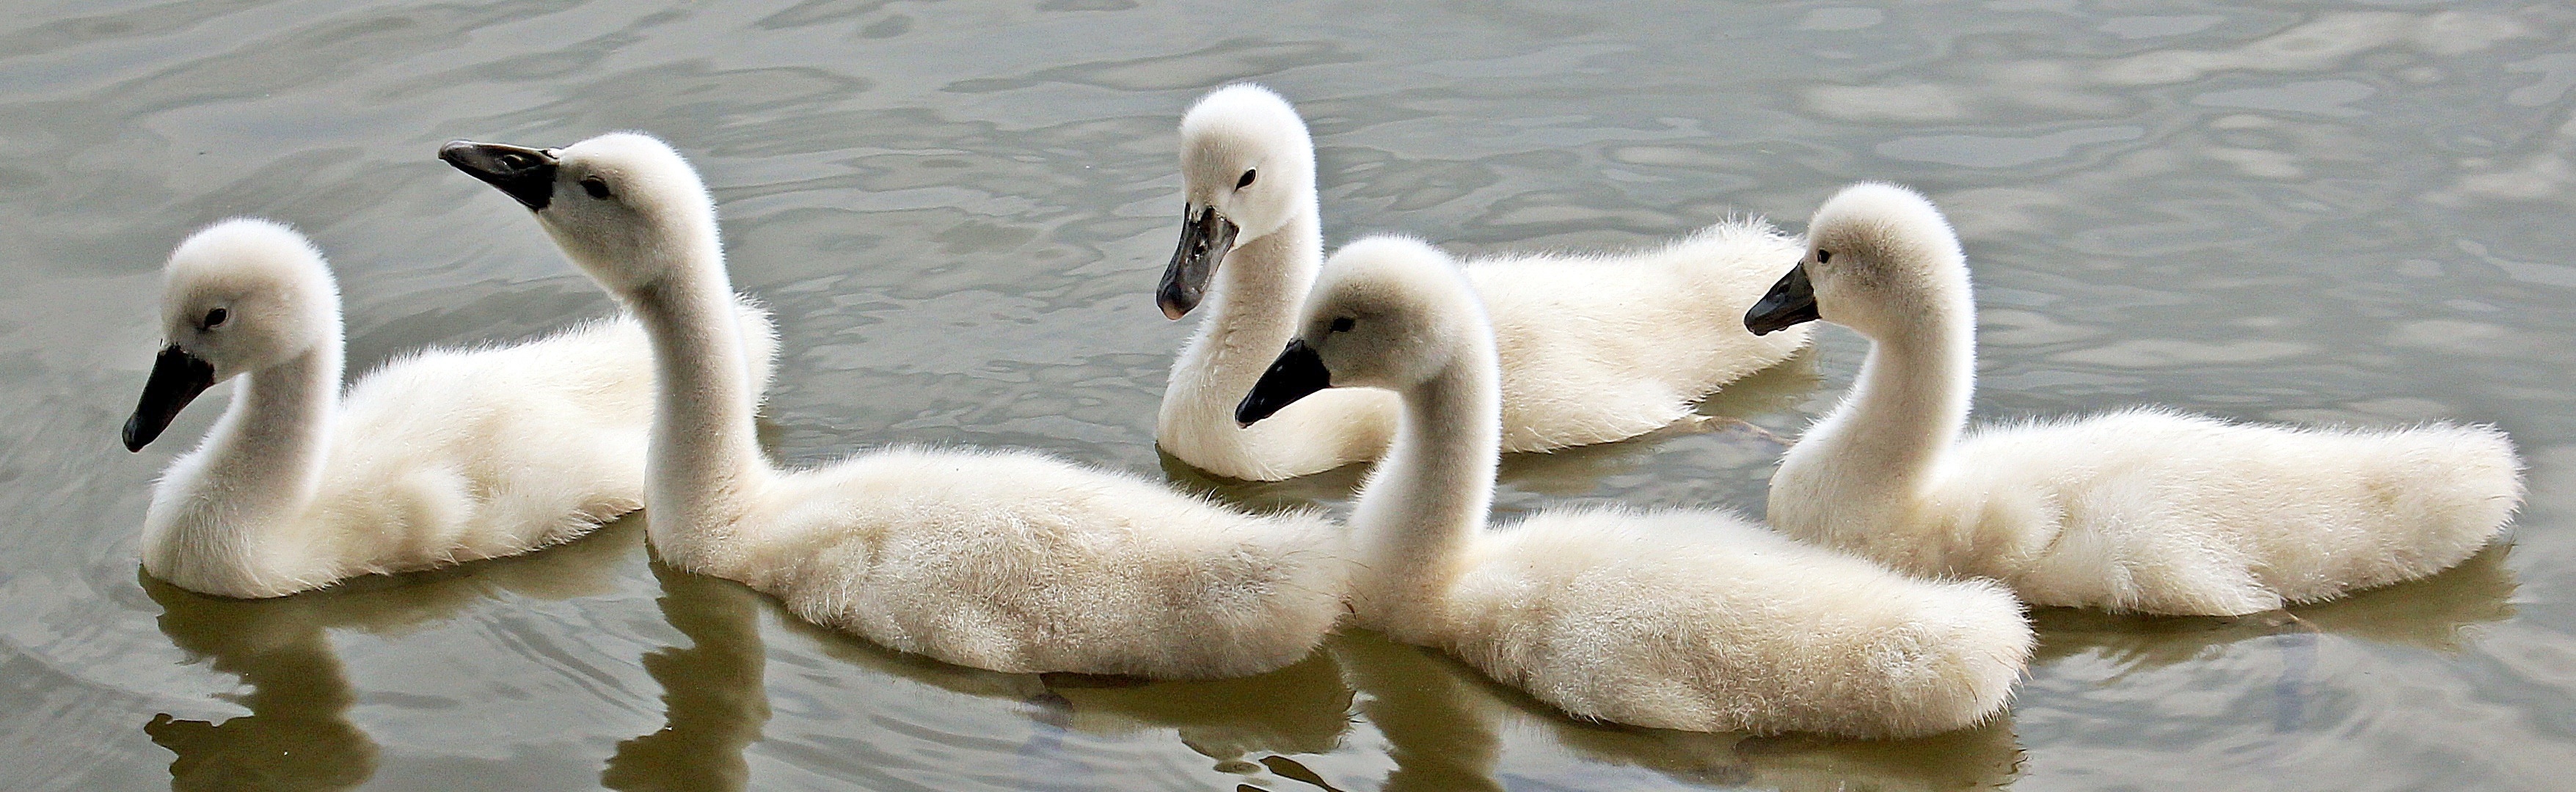 White little swans swim in the pond.